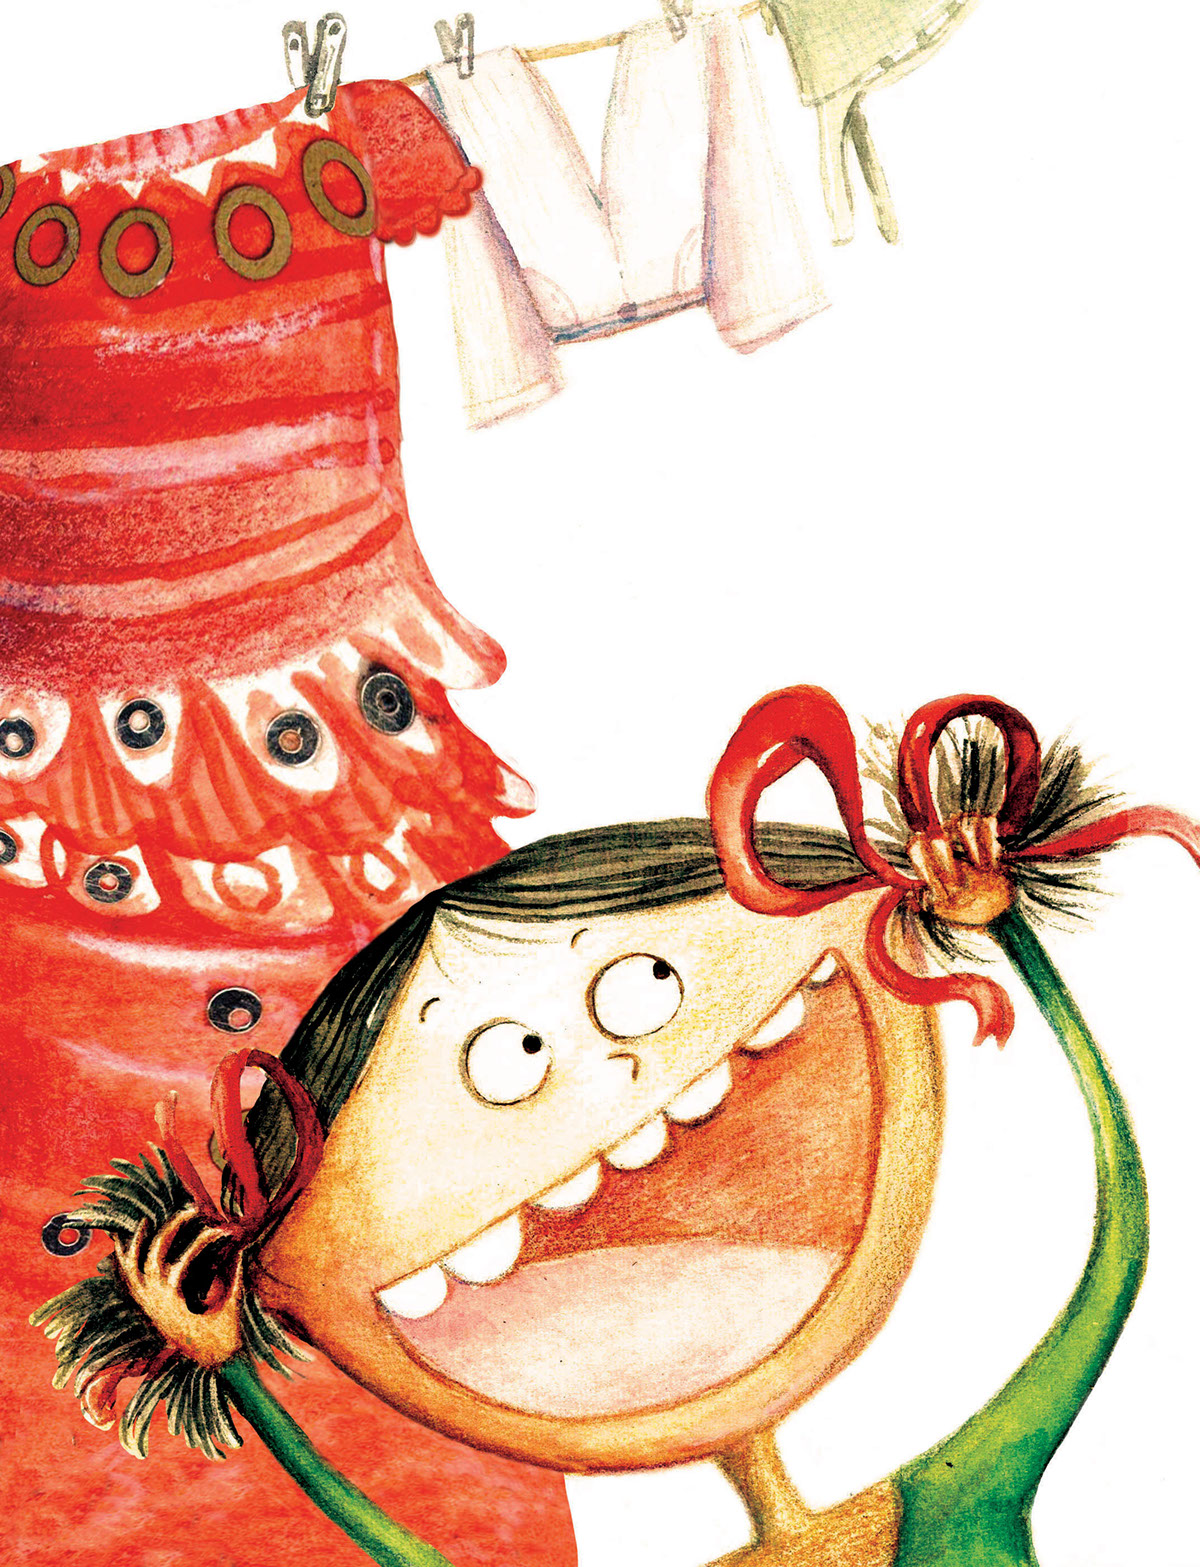 children's book illustration watercolors scarecrows kidlit art